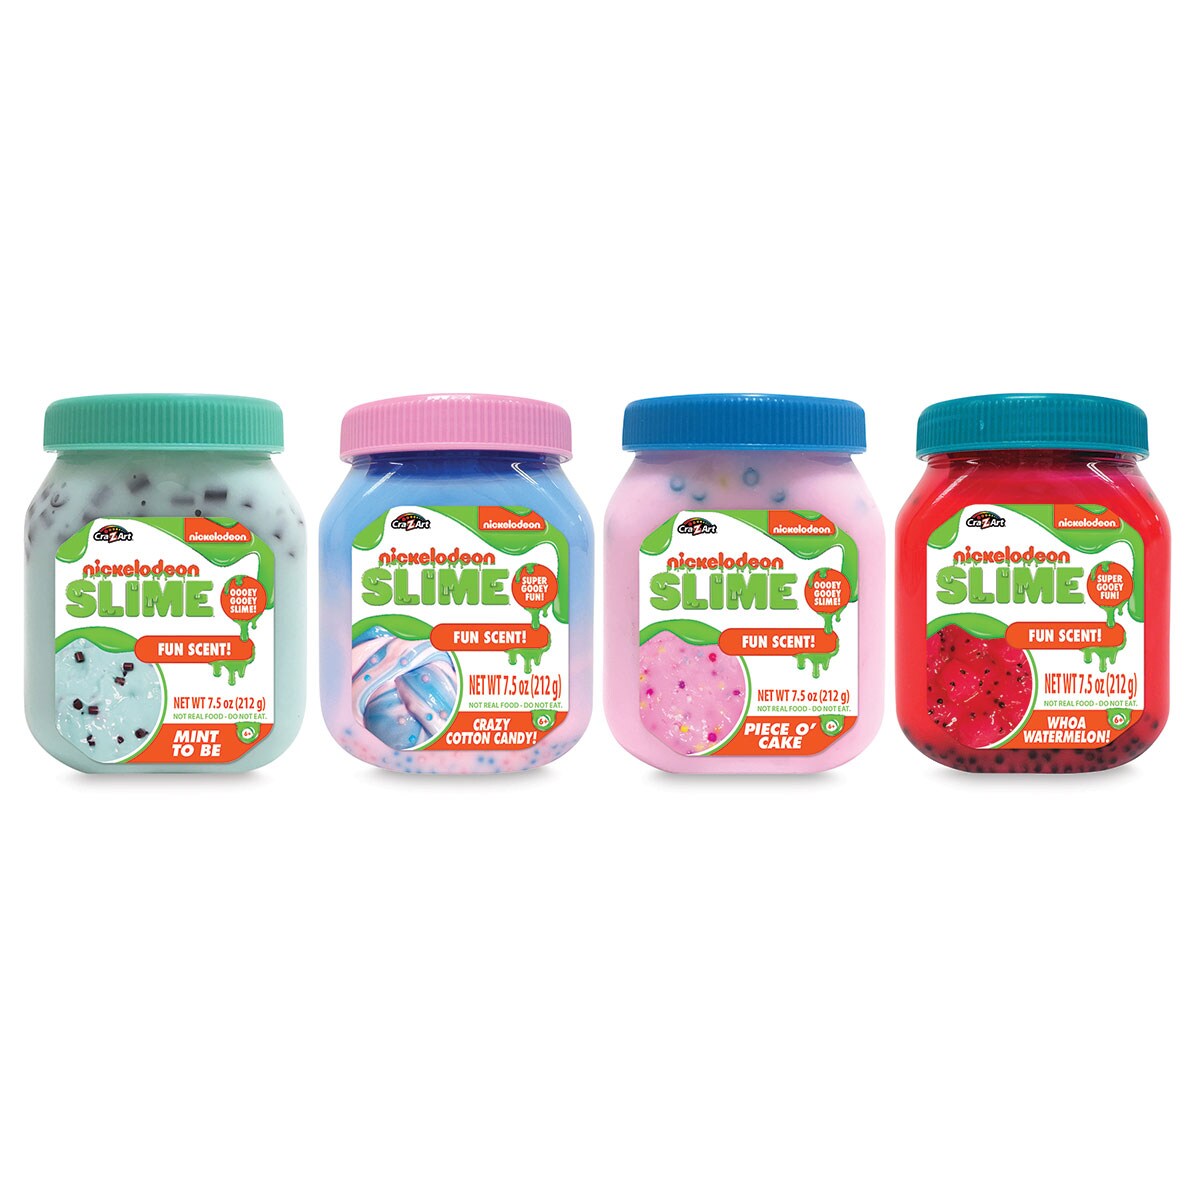 Nickelodeon Slime Kit - Fun Food Jars, sold individually